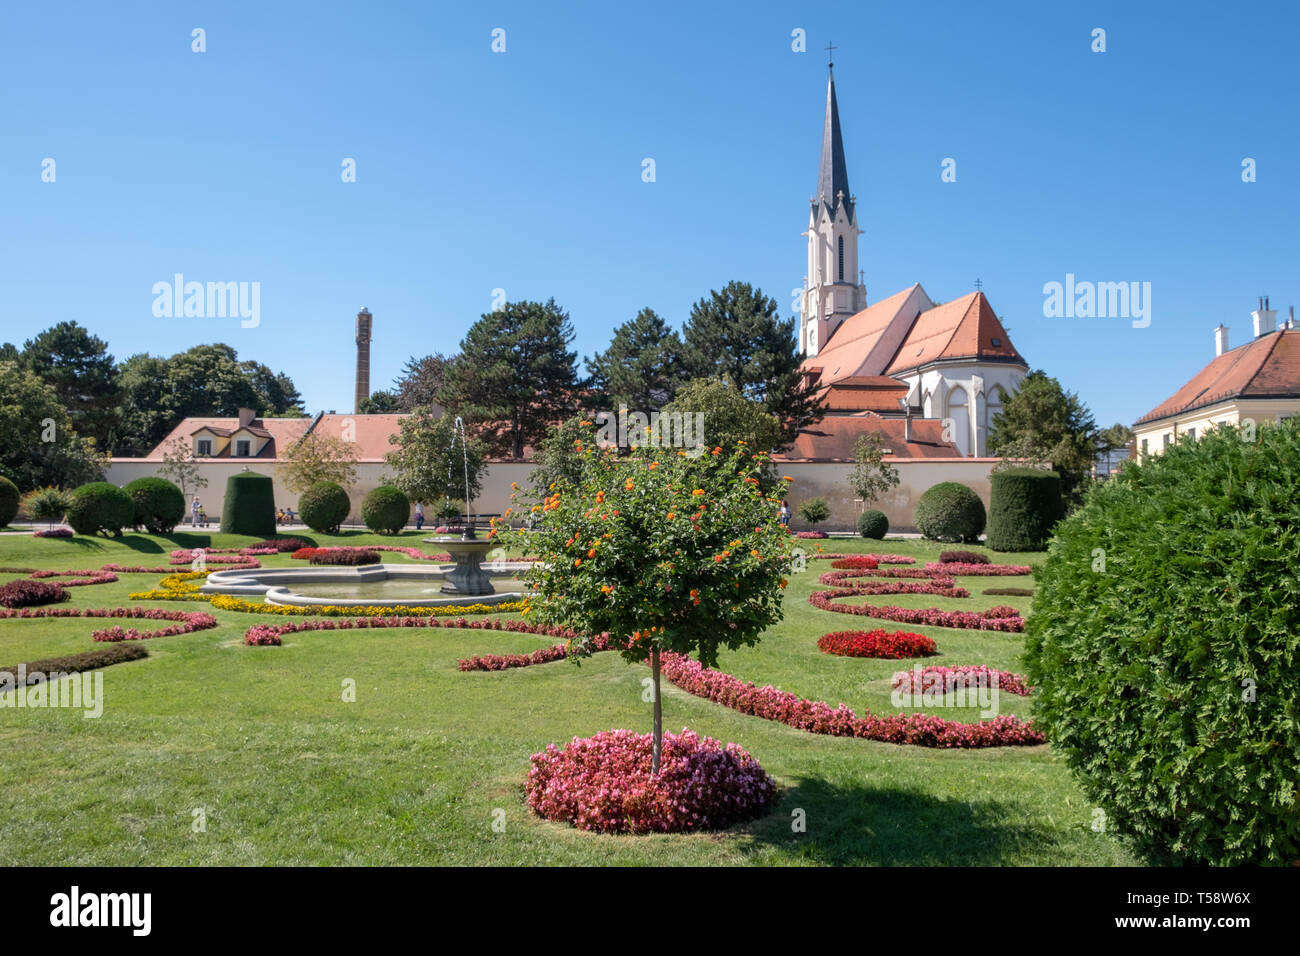 The Palmenhaus Garten at Schloss Schoenbrunn in Vienna, Austria with view of the catholic church Mariae Hilf Stock Photo